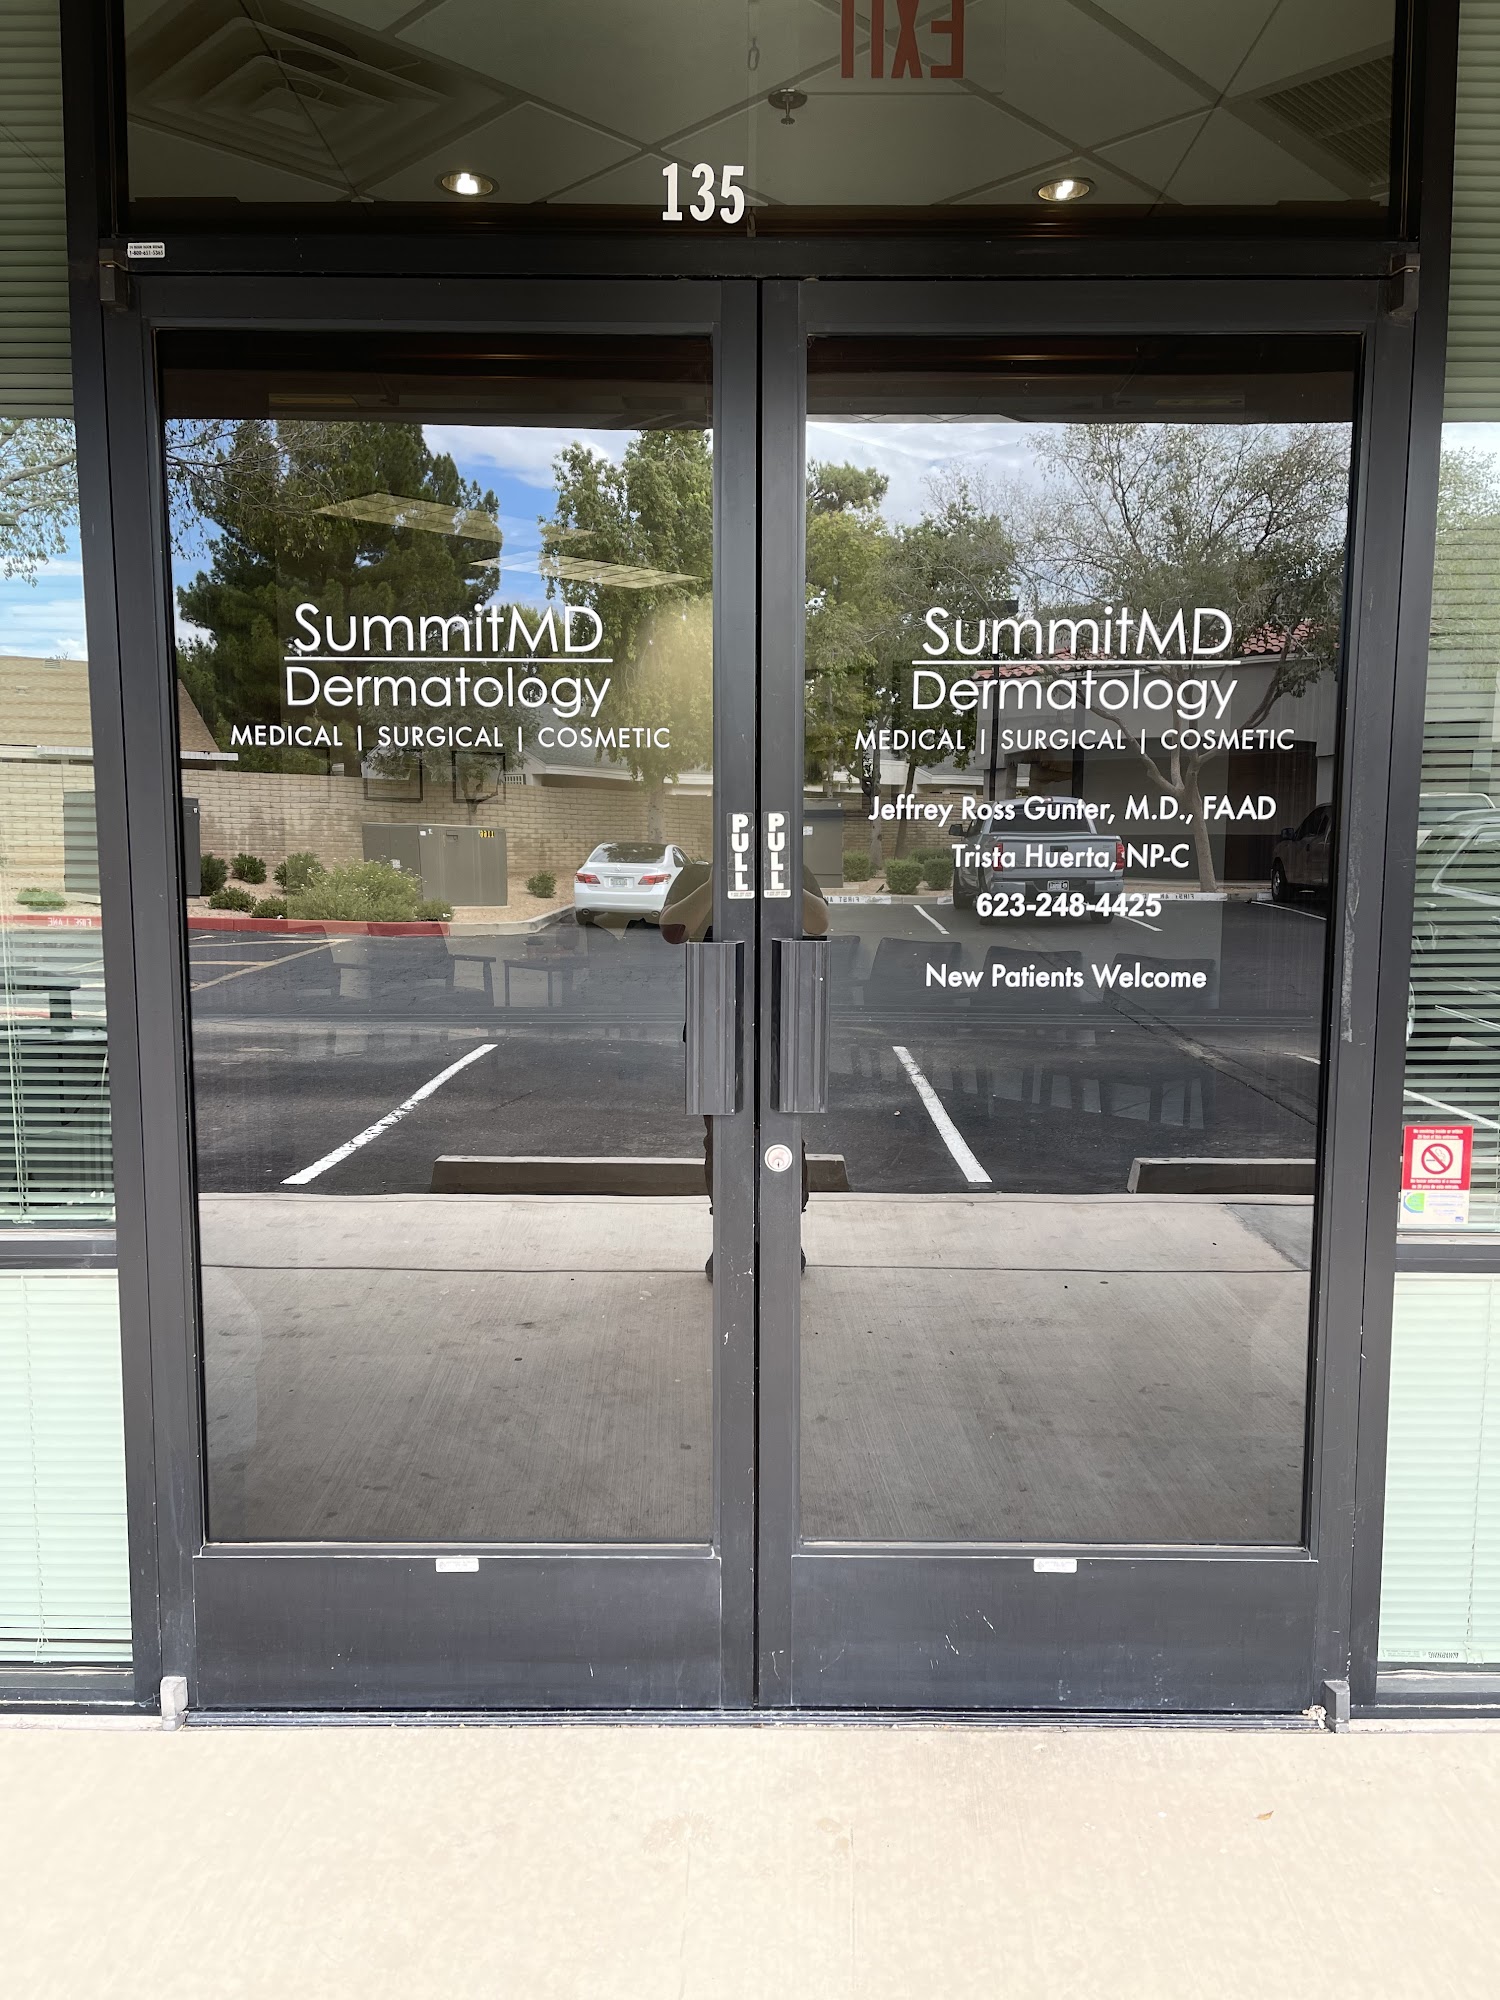 SummitMD Dermatology Sun City West 13940 W Meeker Blvd suite 135, Sun City West Arizona 85375